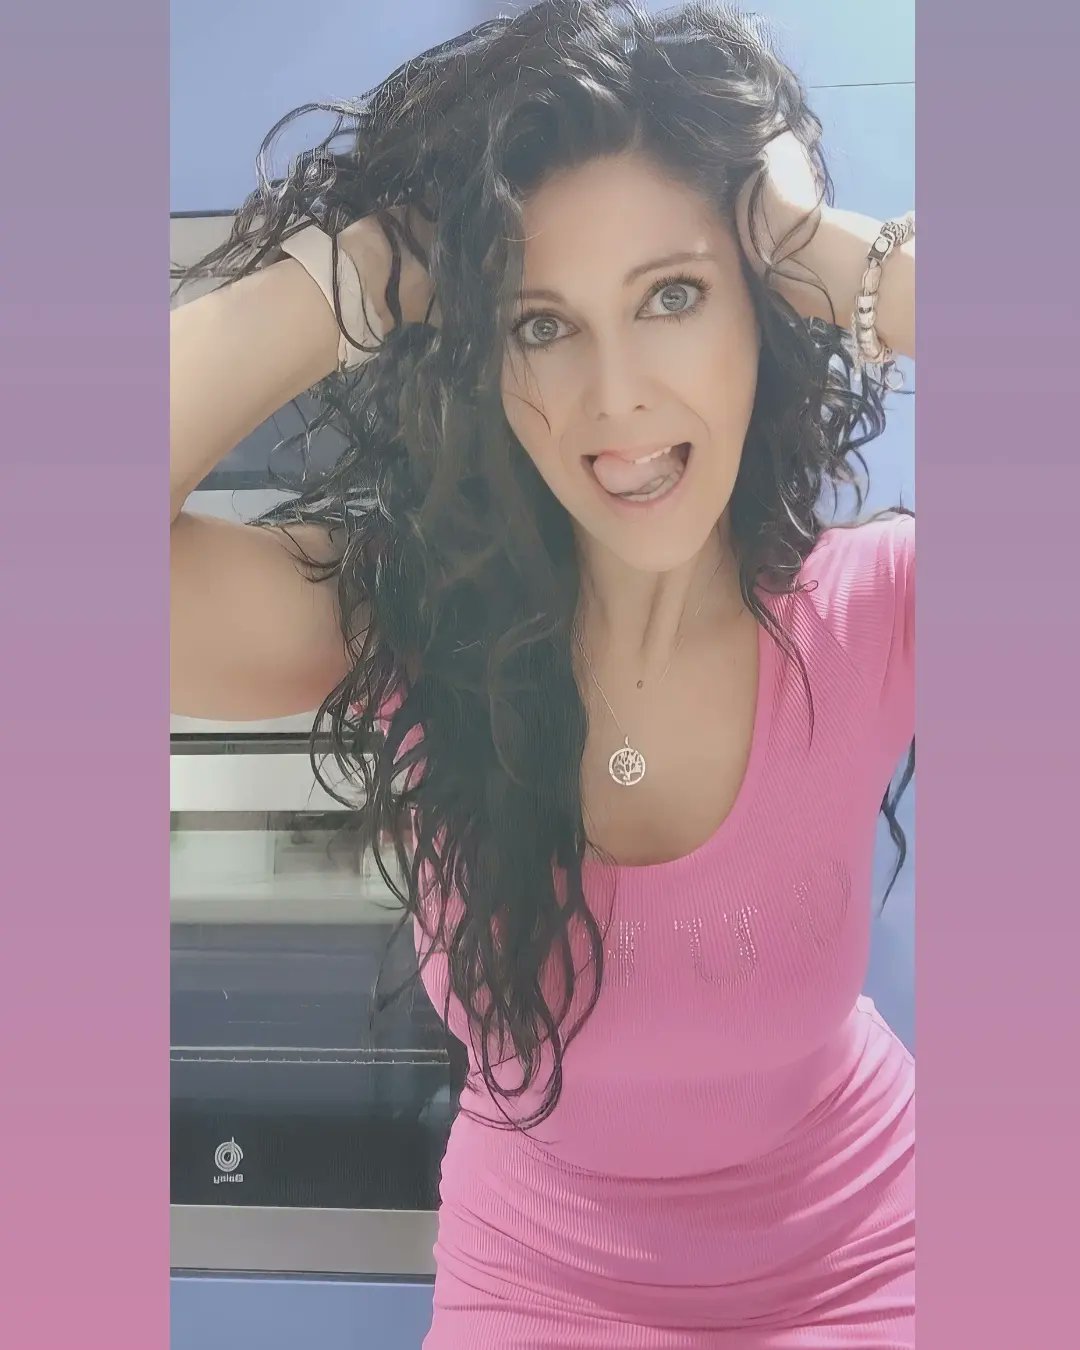 Tw Pornstars 4 Pic Spanish Cougar Twitter Desearos Un Gran Inicio De Semana 💓💓💓💓💓 9 57 Pm